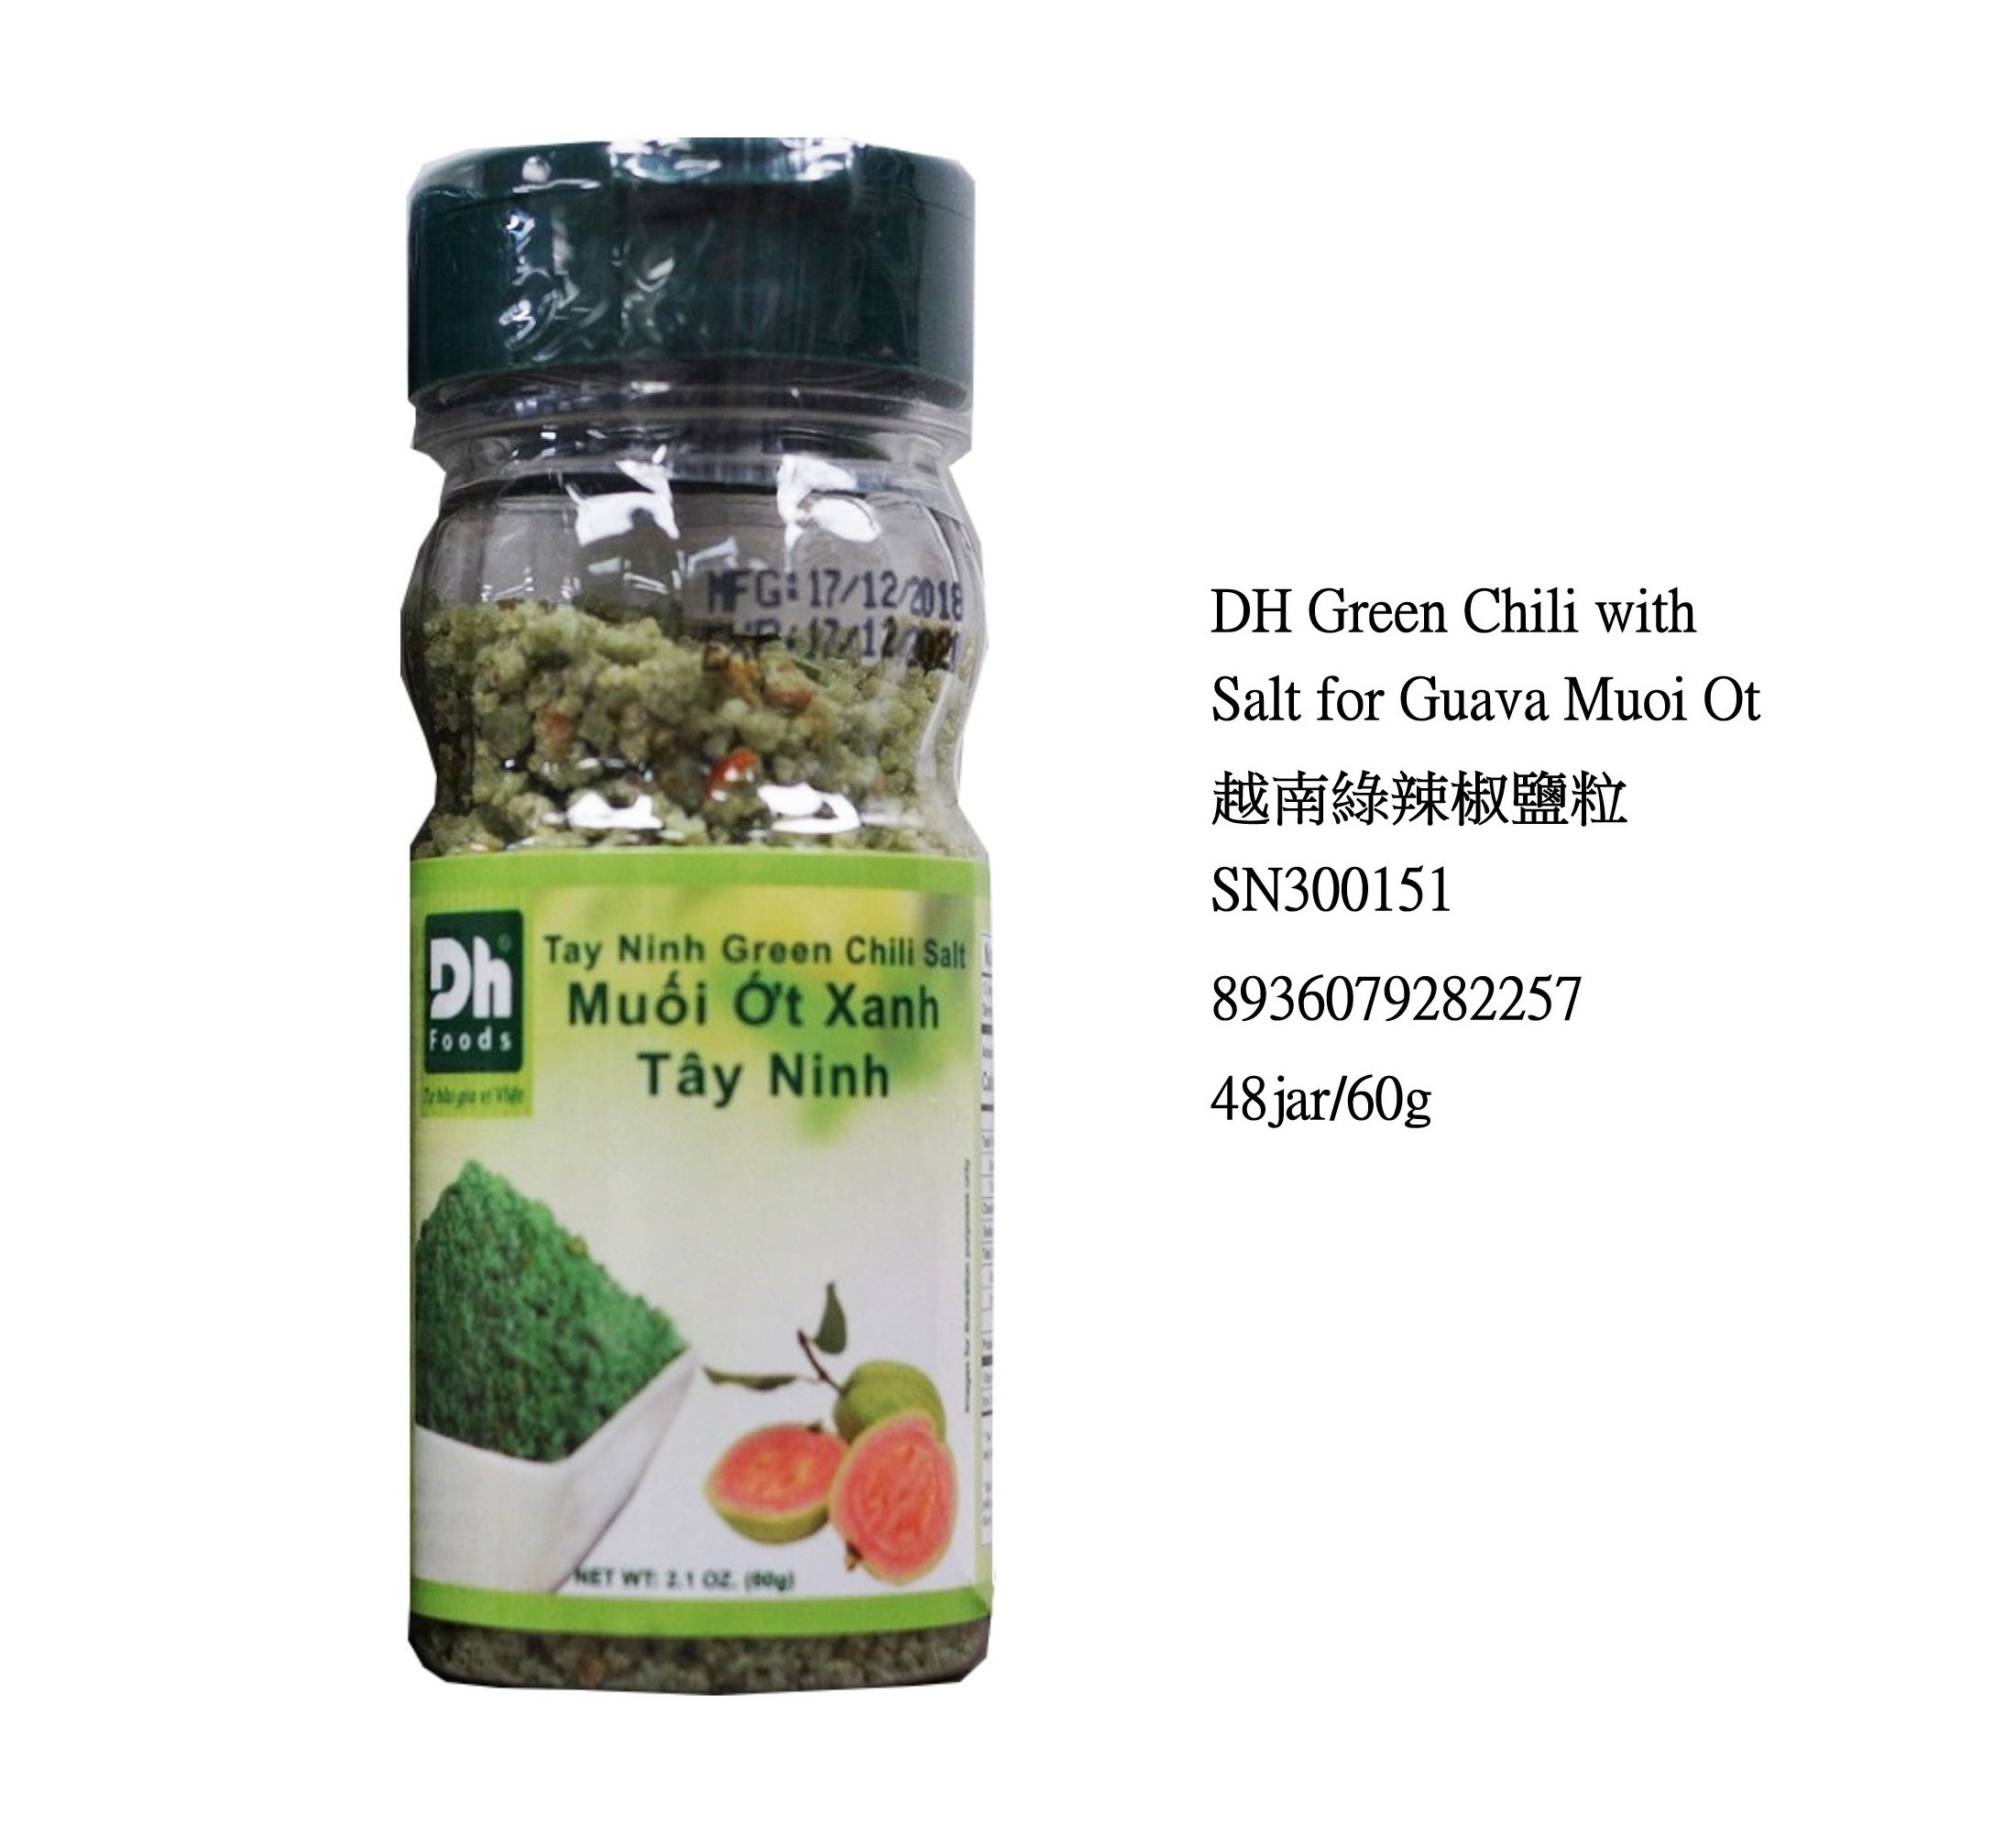 DH GREEN CHILI SALT FOR GUAVA MUOI OT SN300151